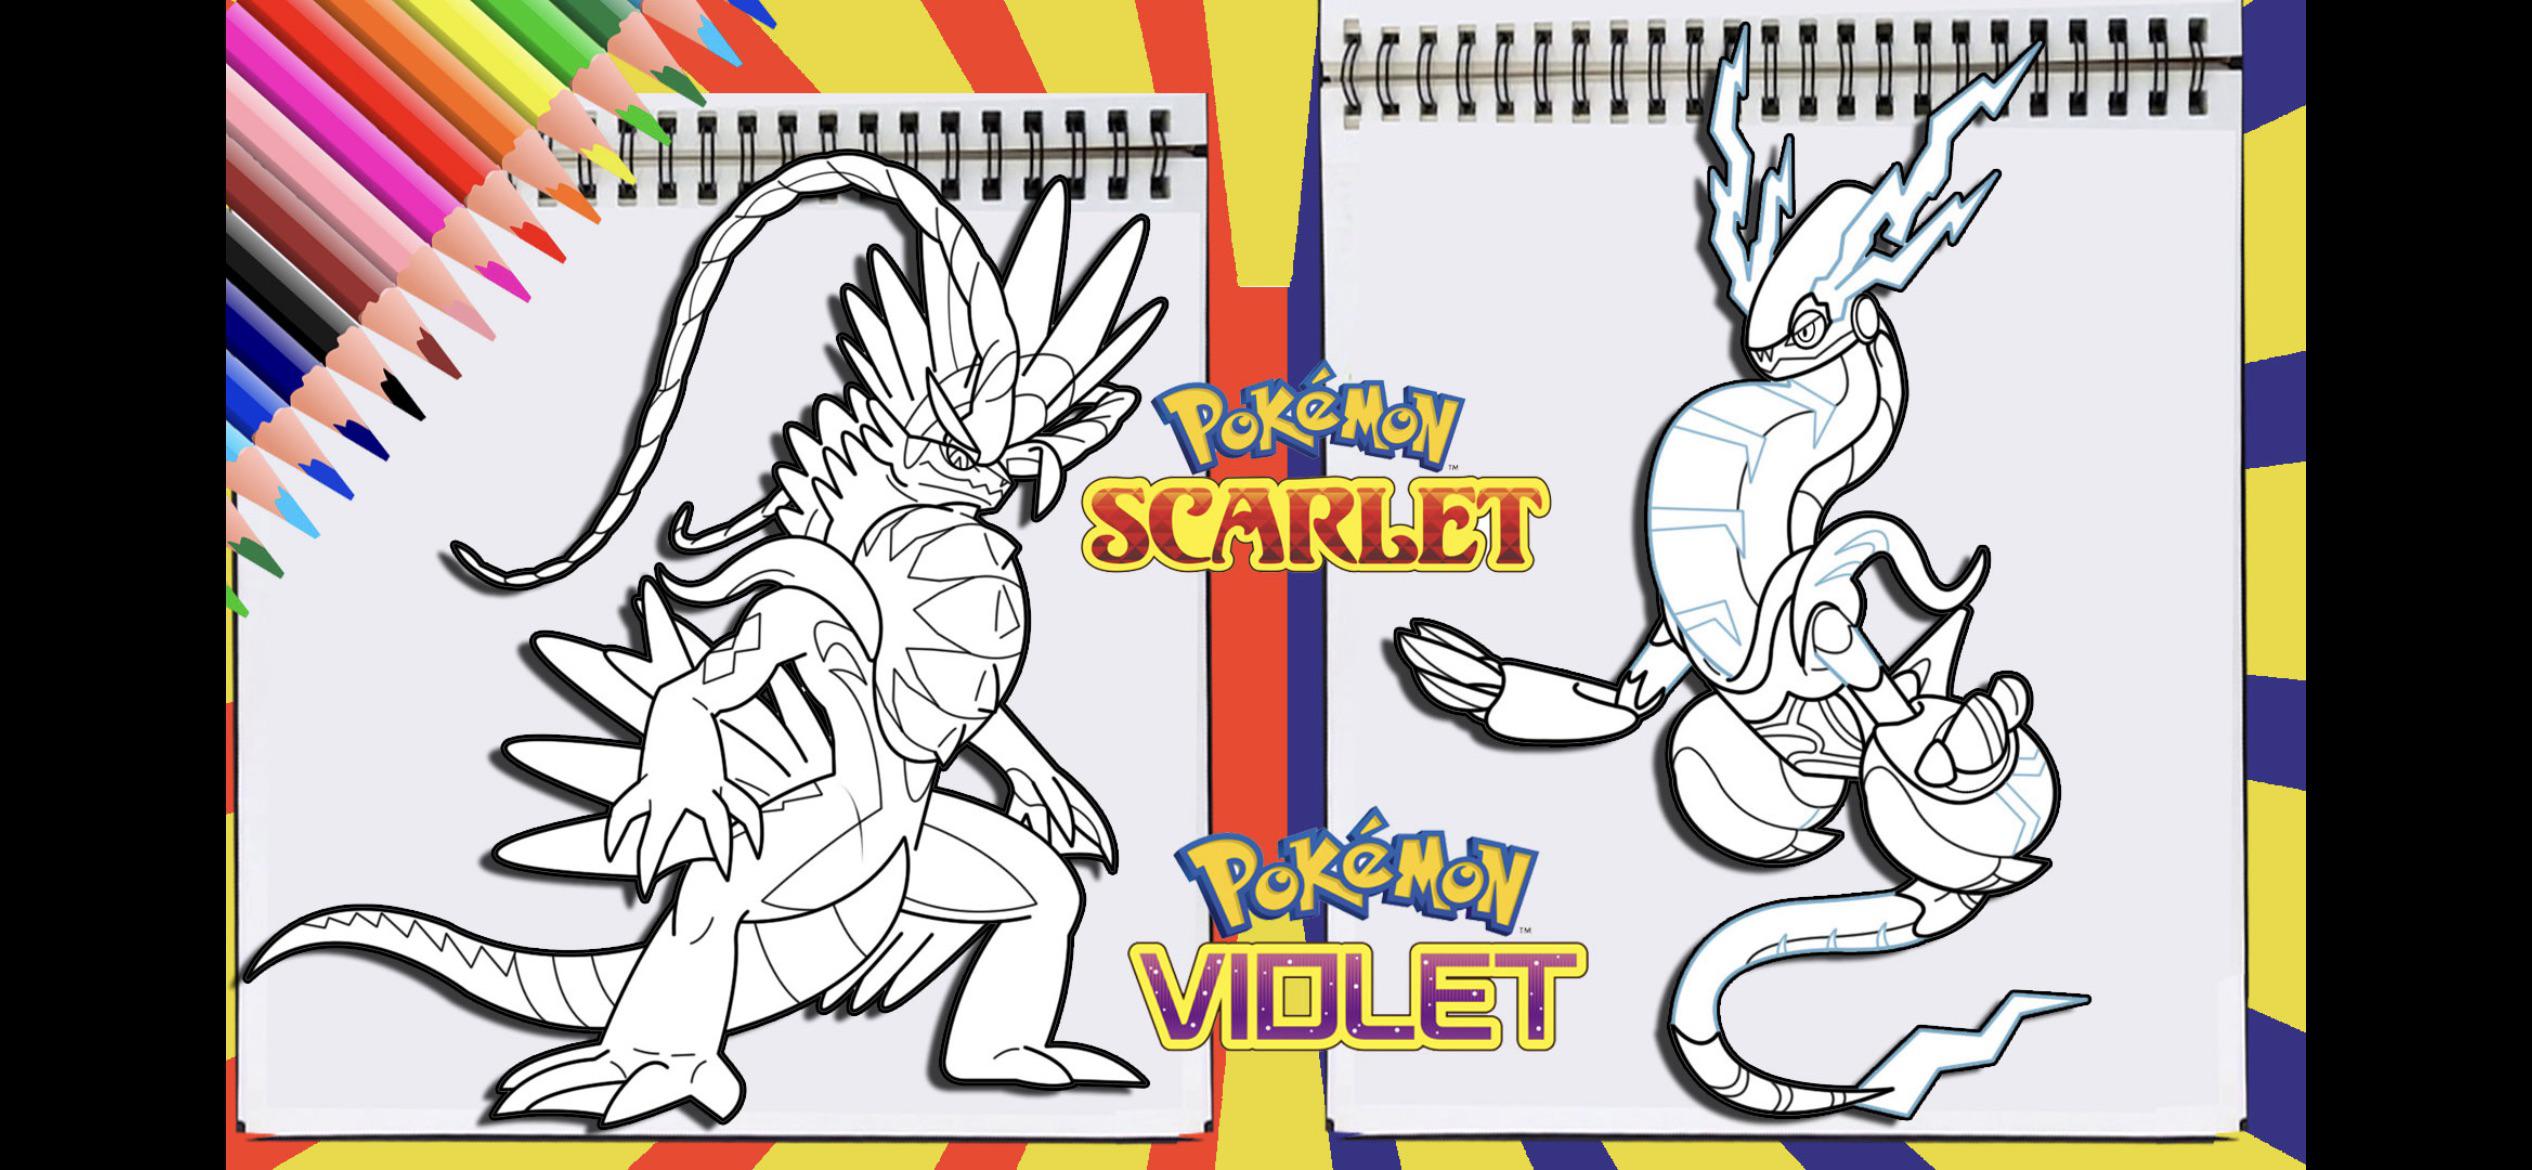 Scarlet and violet legendary pokemons miraidon and koraidon done by me rpokemonscarletviolet